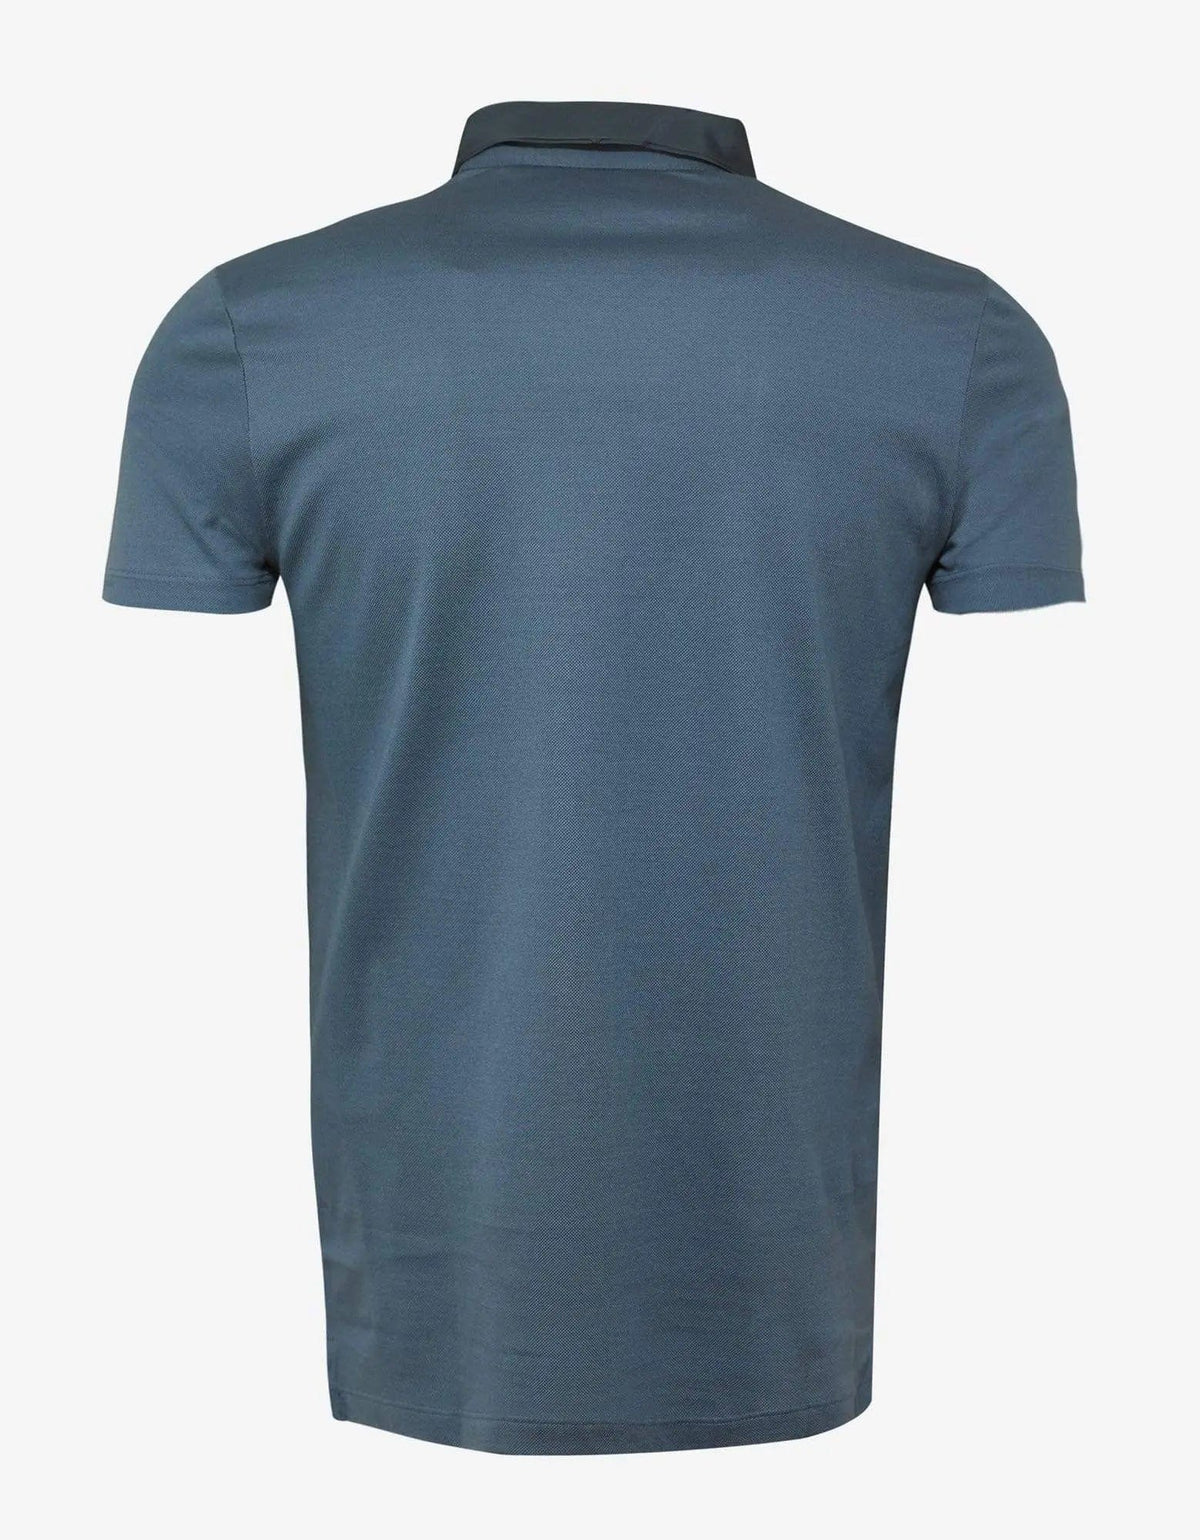 Lanvin Lanvin Metallic Blue Polo T-Shirt with Grosgrain Collar